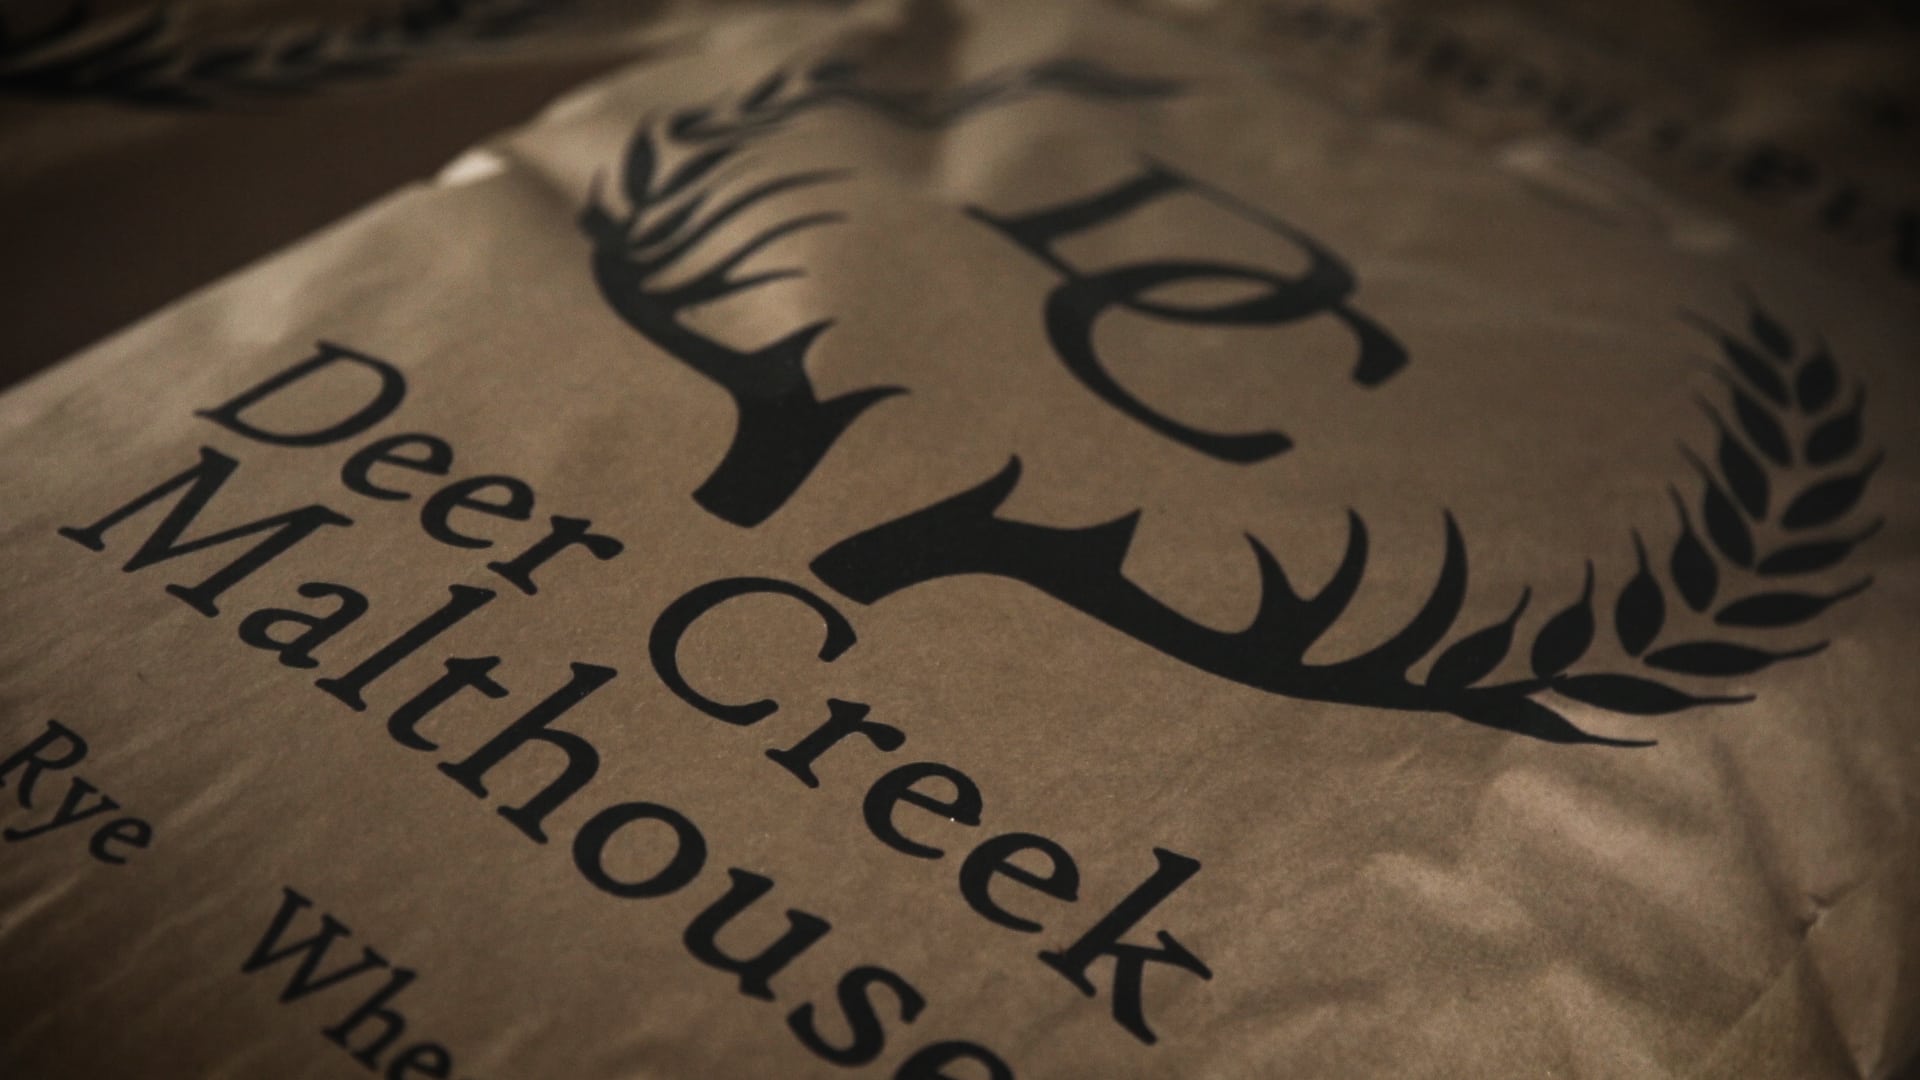 Deer Creek Malthouse